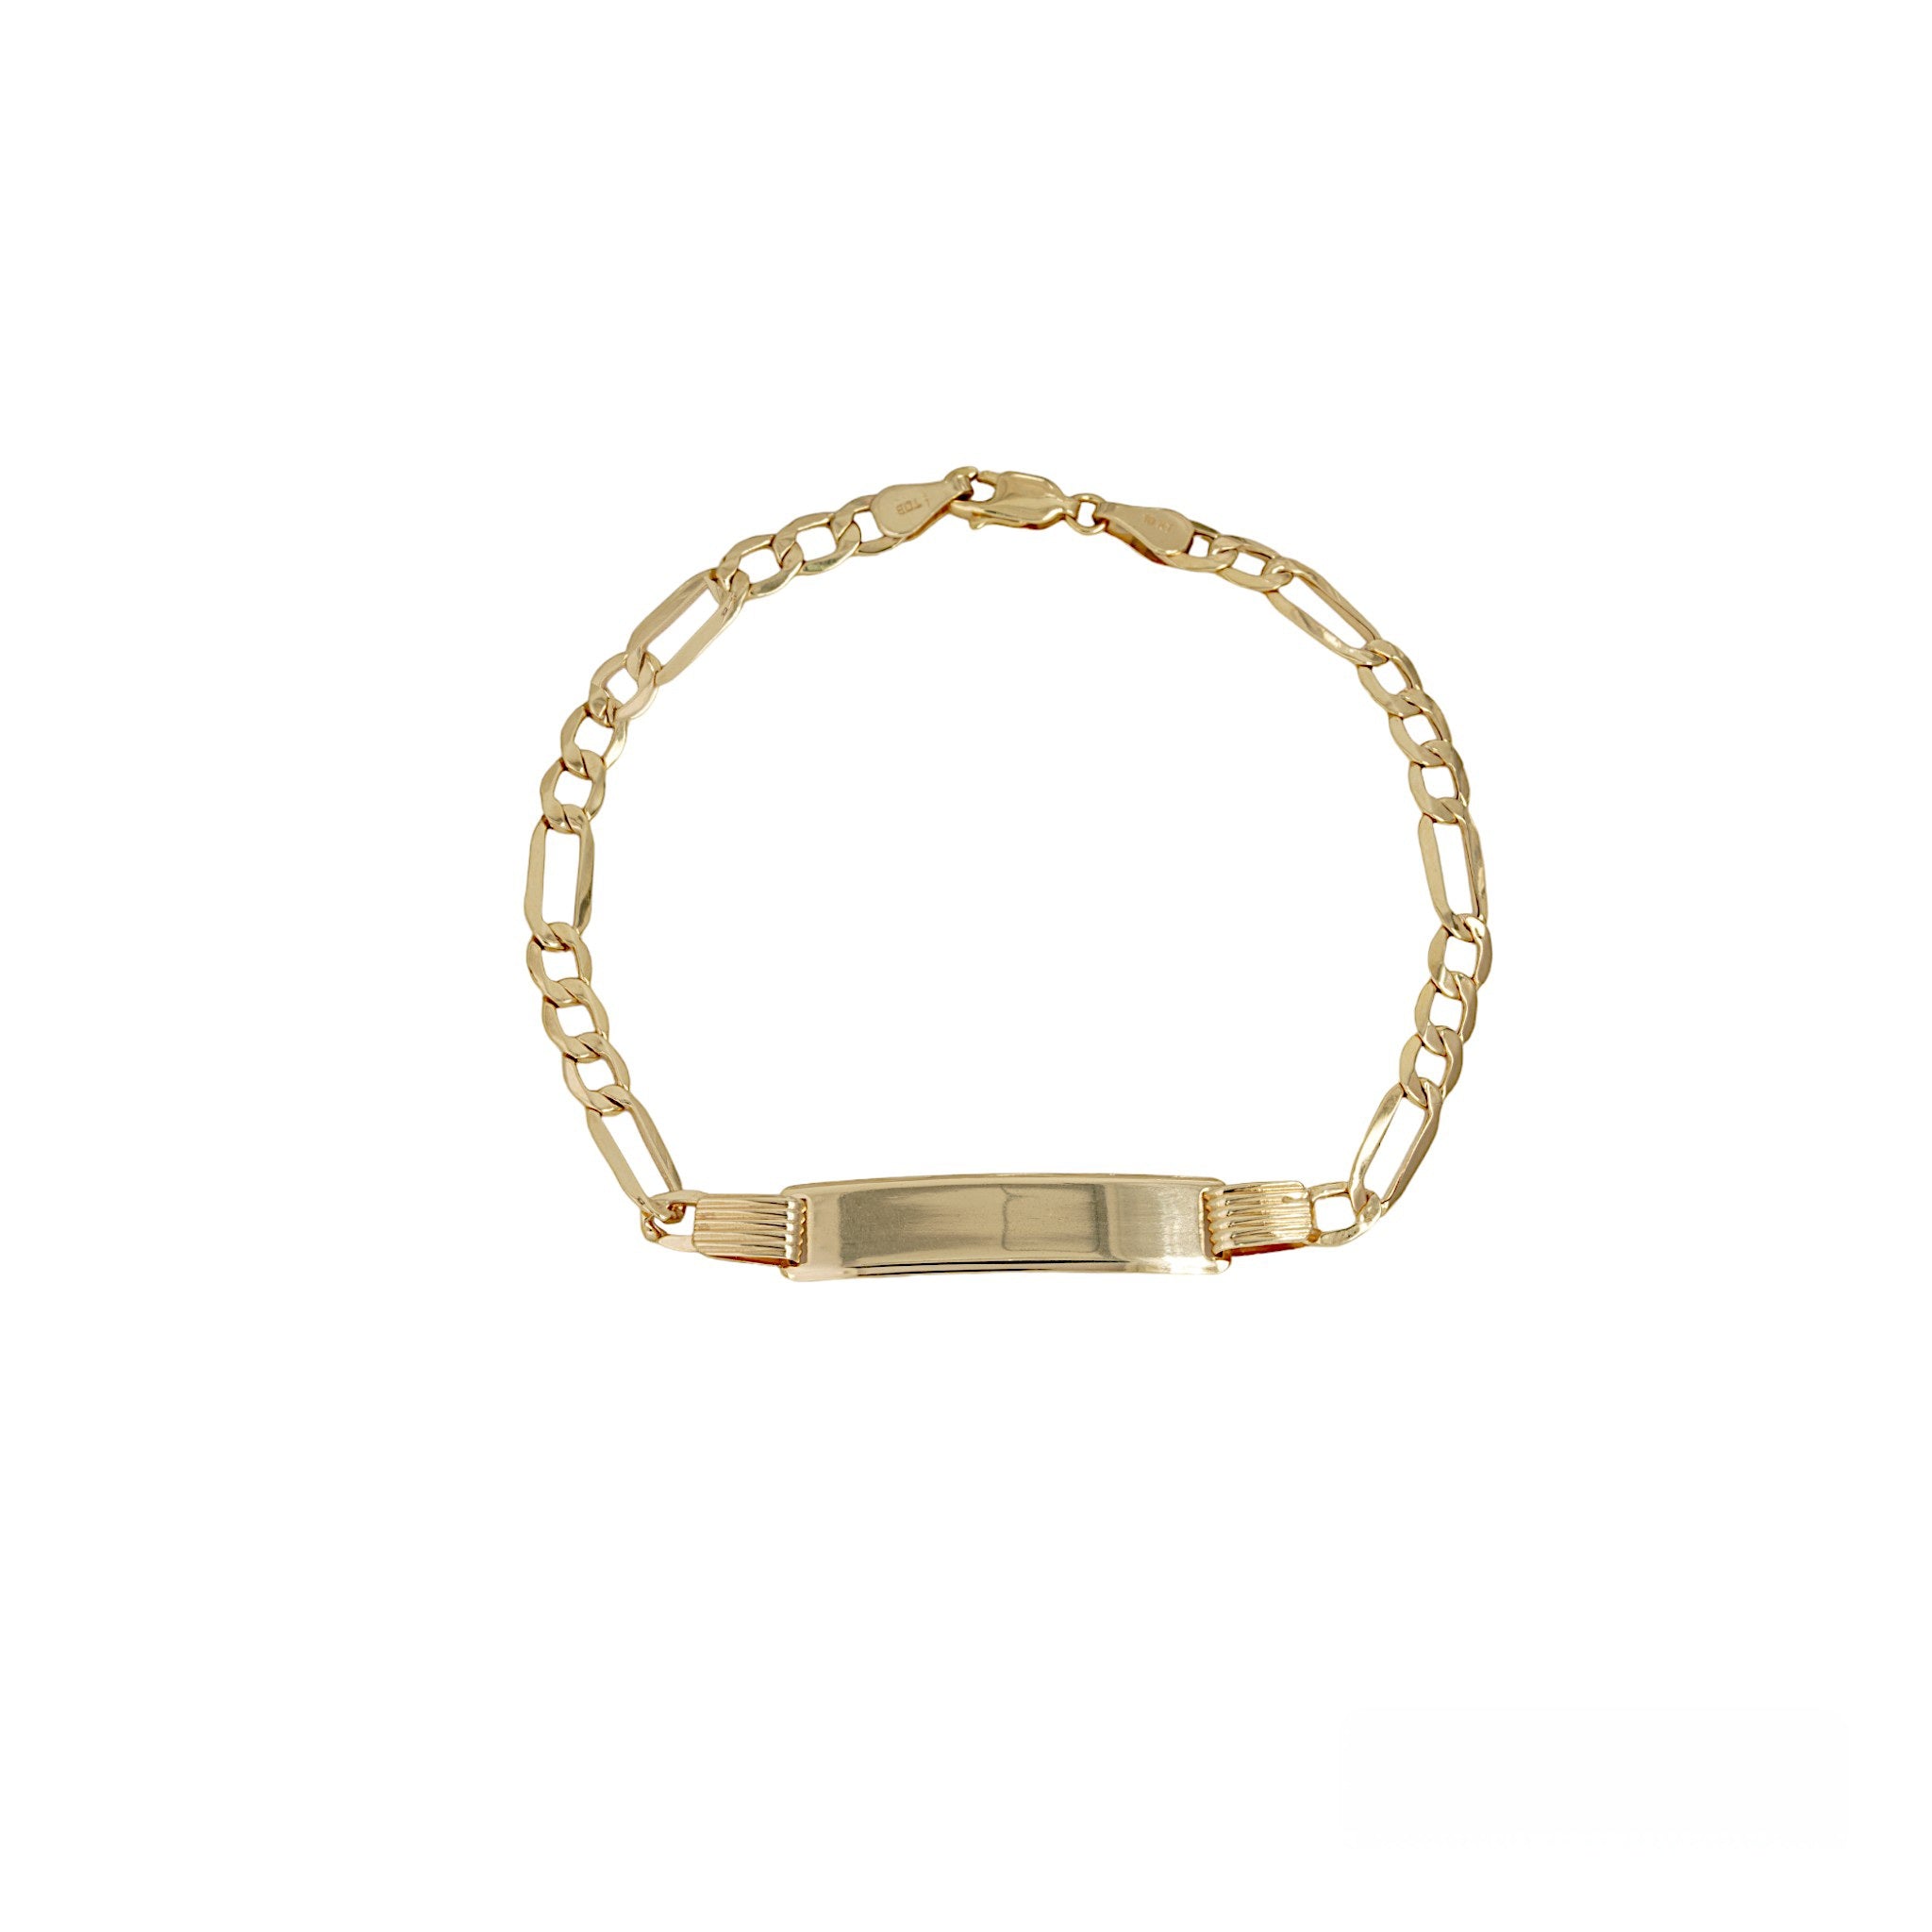 8″ 10K yellow gold Medical bracelet